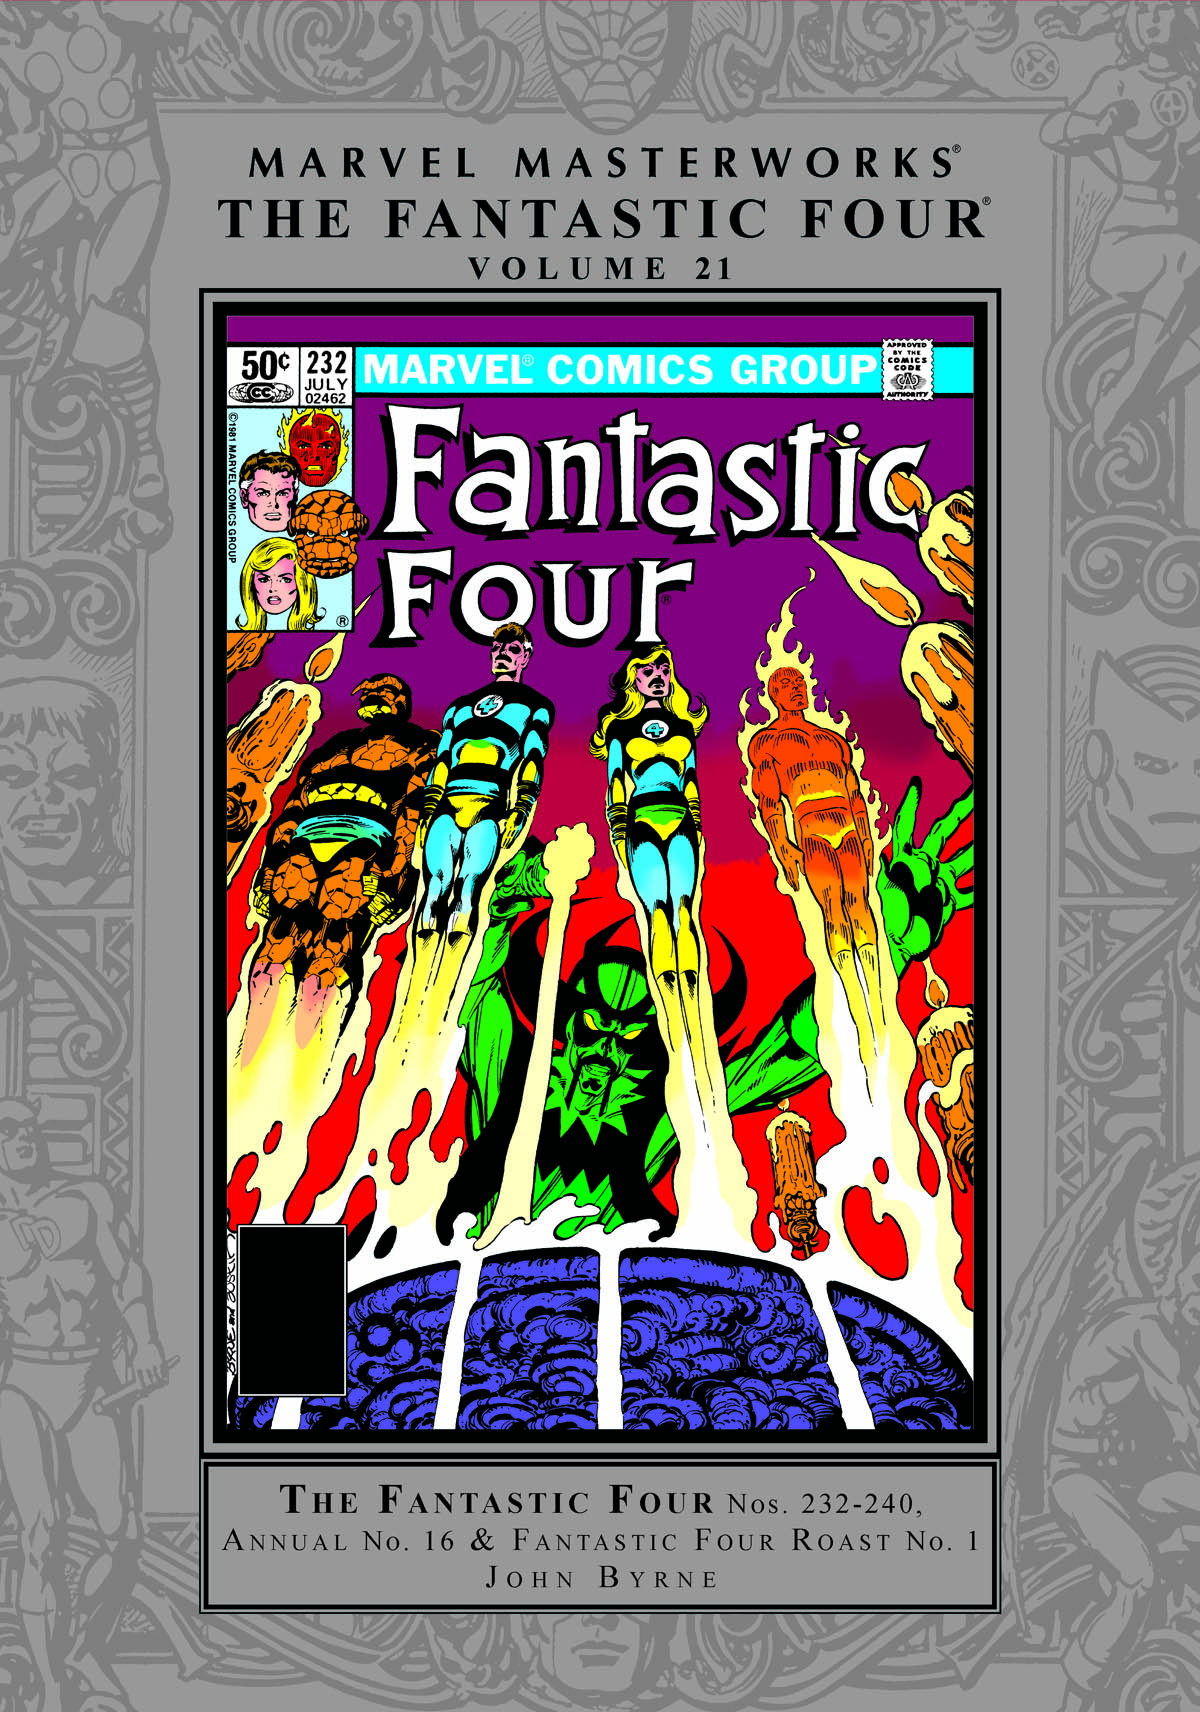 Marvel Masterworks: The Fantastic Four Vol. 21 (Hardcover)